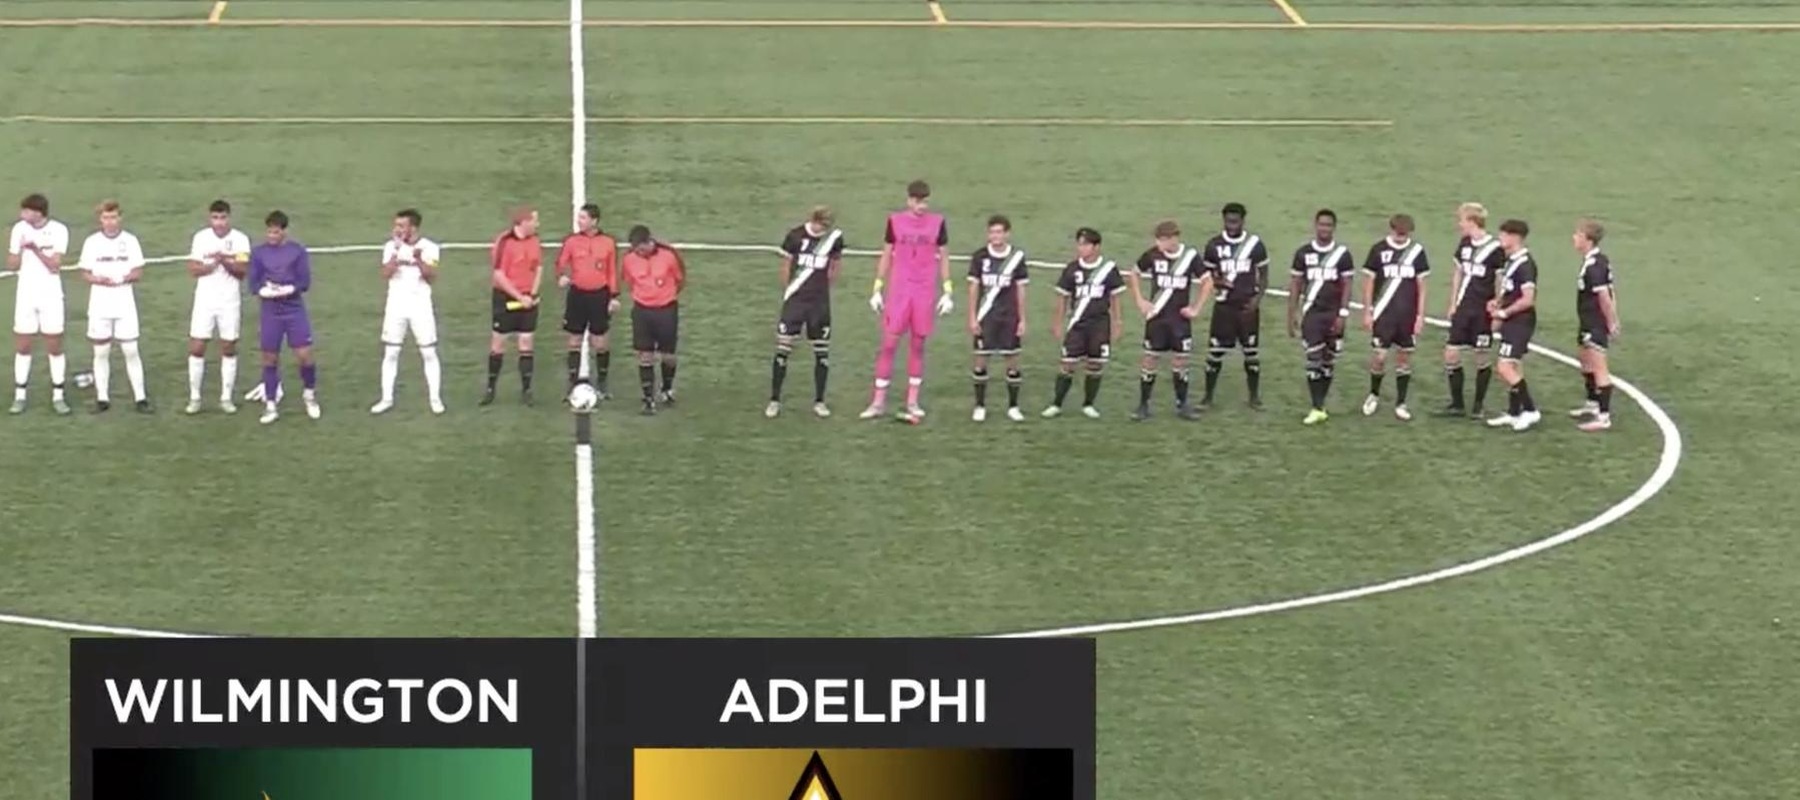 Adelphi Spoils 2022 Season Opener with 4-0 Win Over WilmU Men’s Soccer